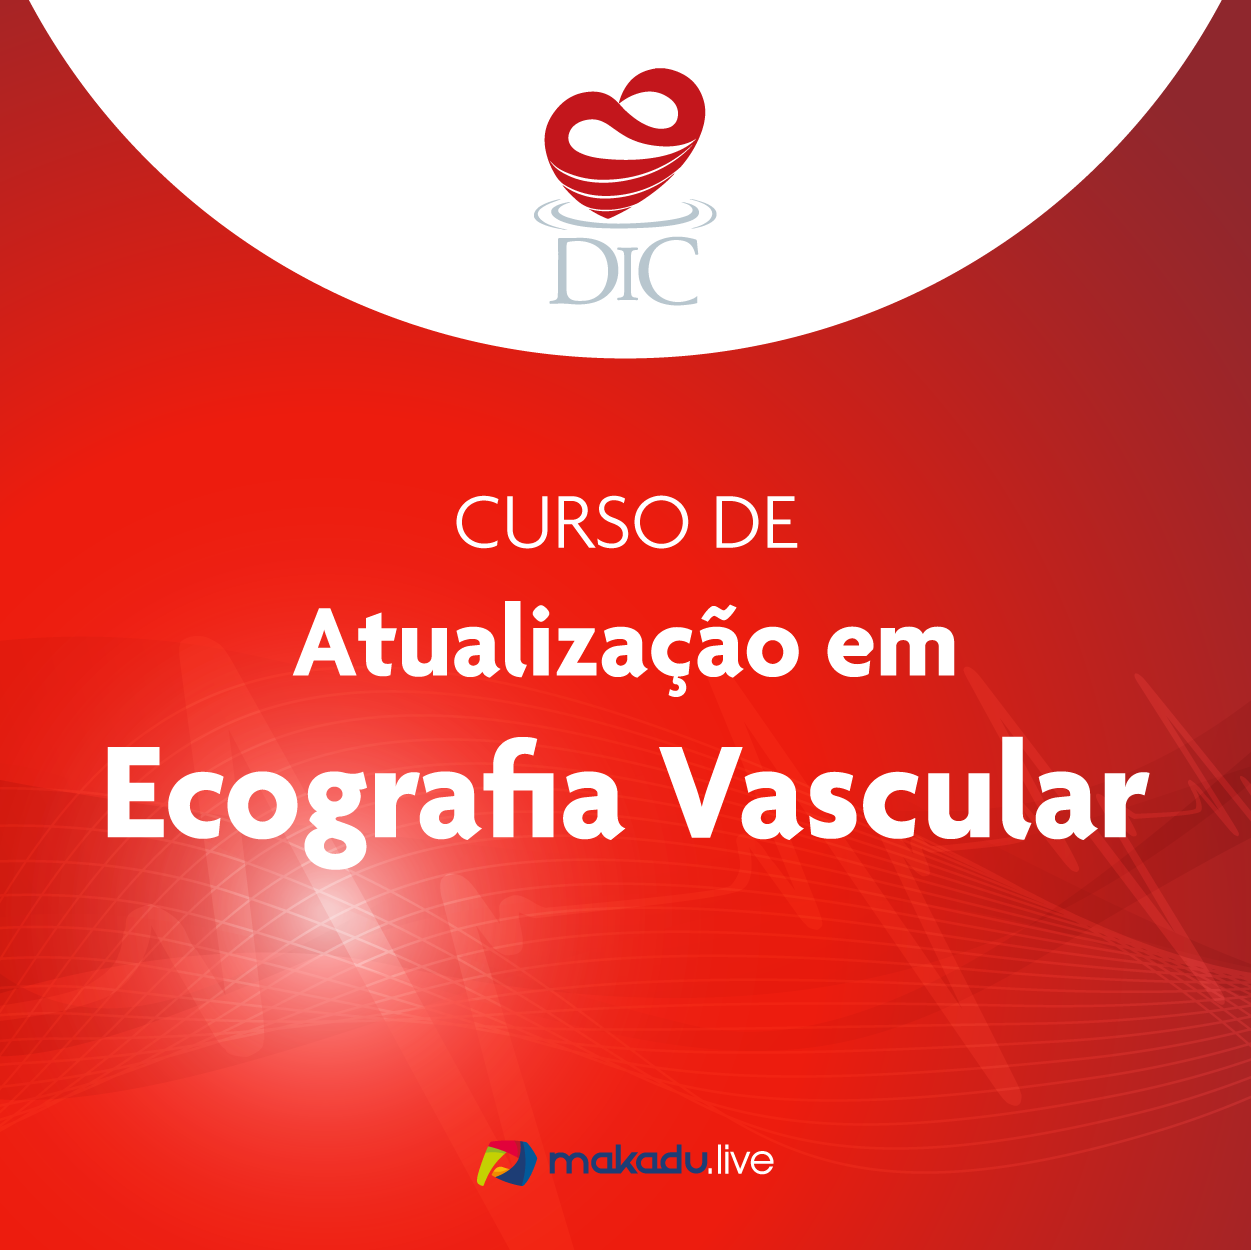 Assets Ecografia Vascular Dic 02